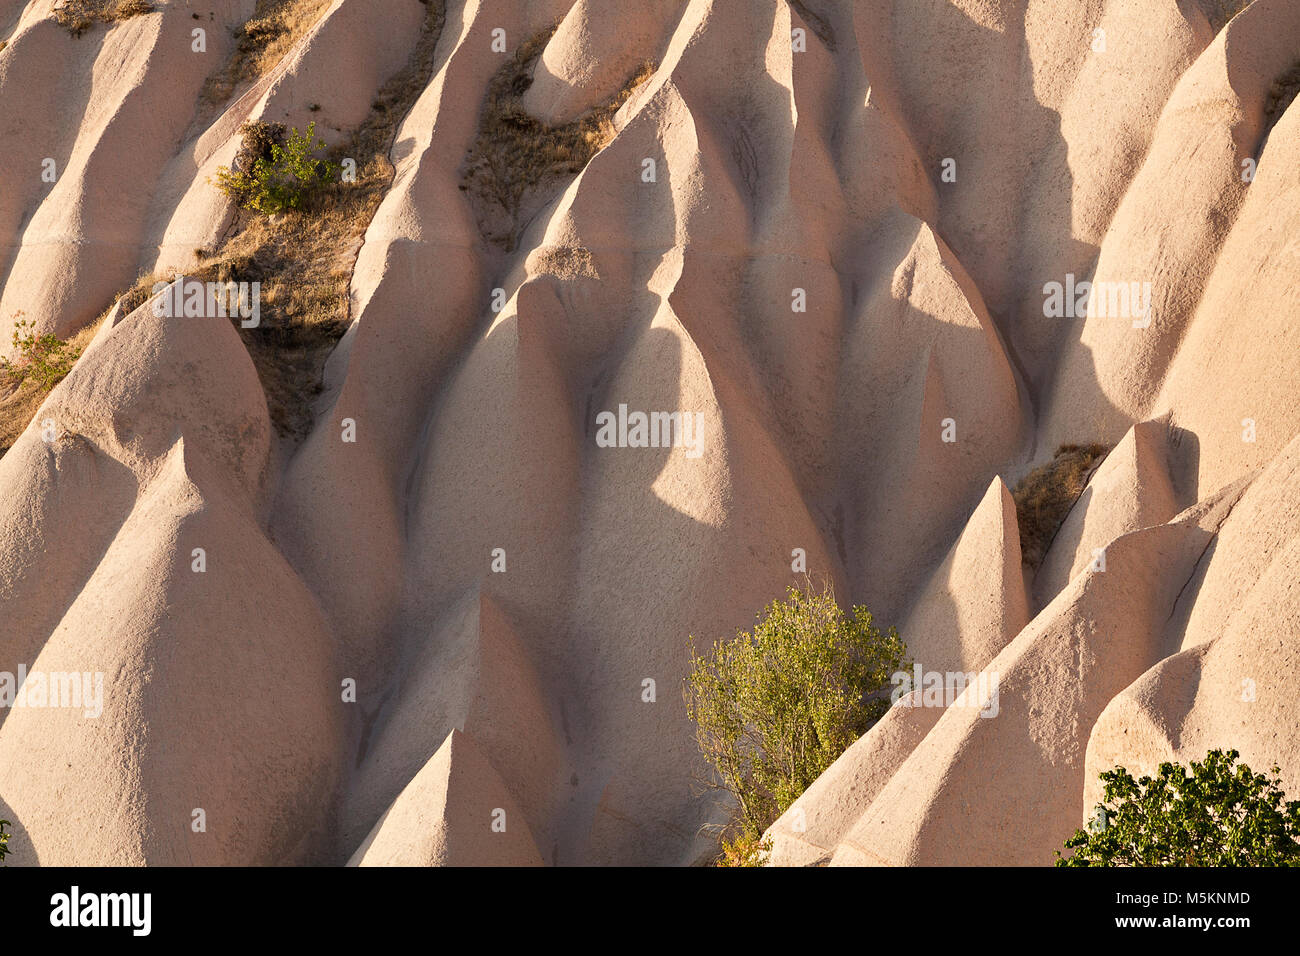 Volcanic rock formations looking like sand dunes in Cappadocia, Turkey Stock Photo